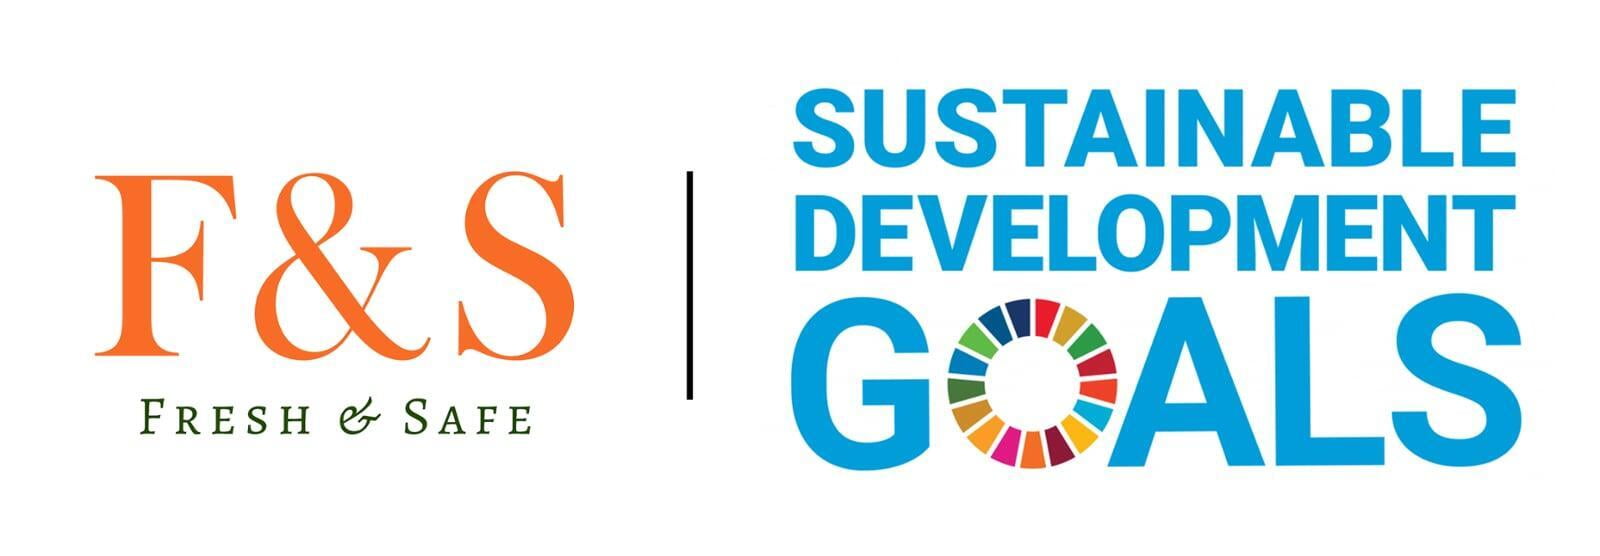 We support Sustainable Development Goals